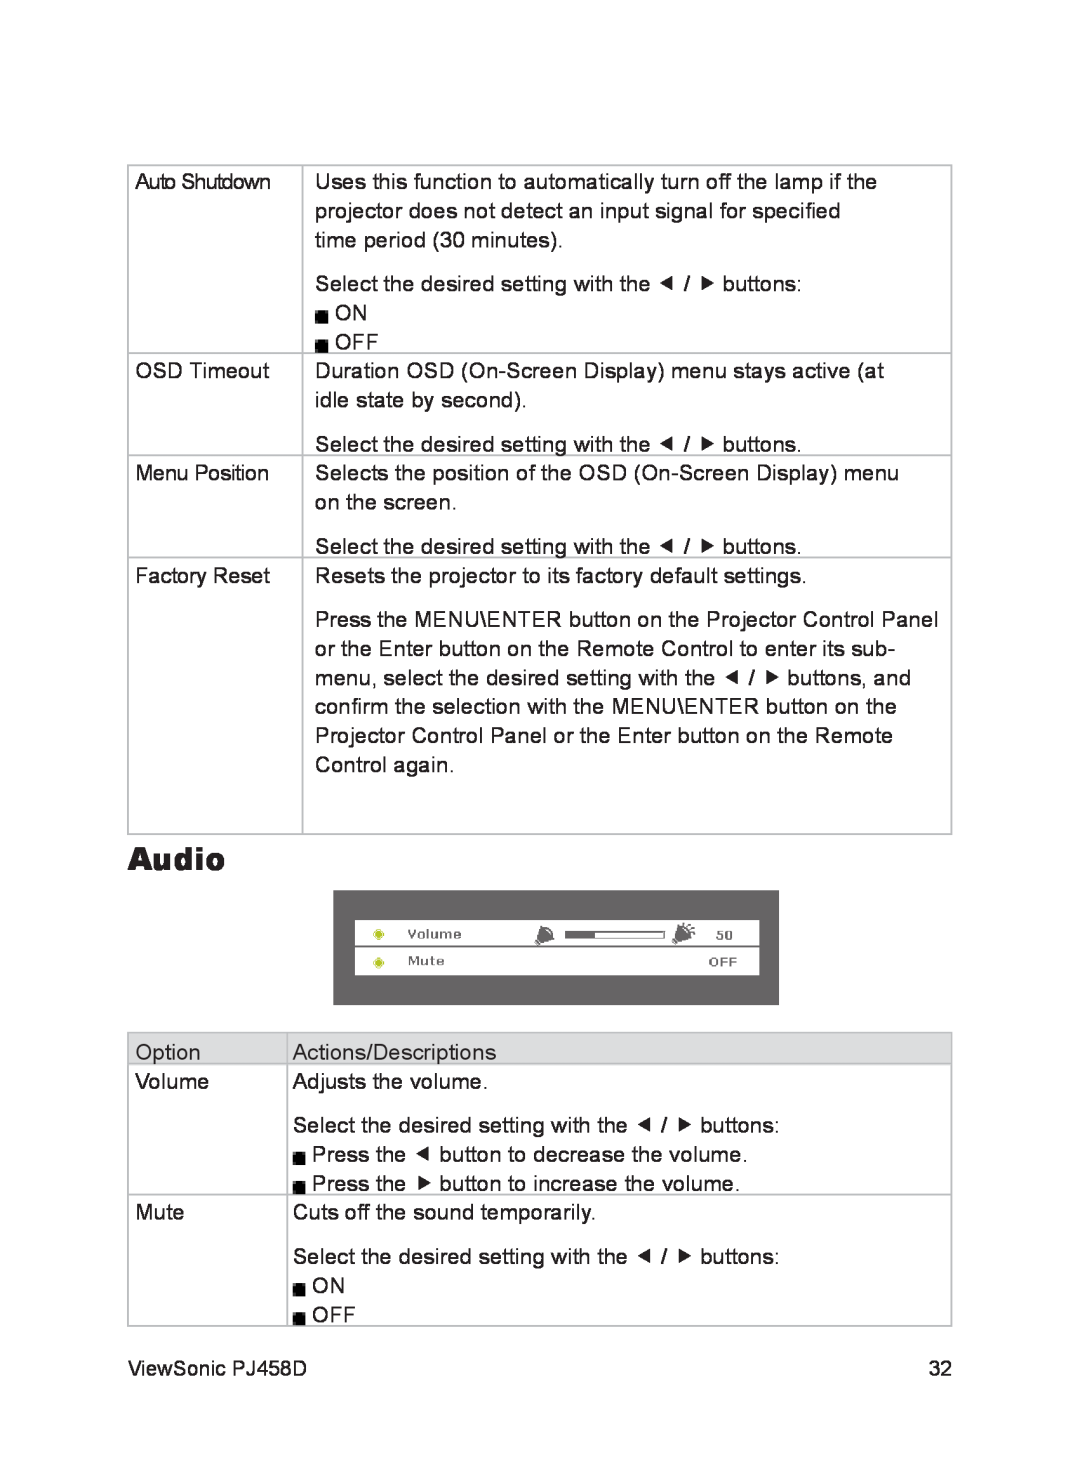 ViewSonic VS10872 manual Audio 